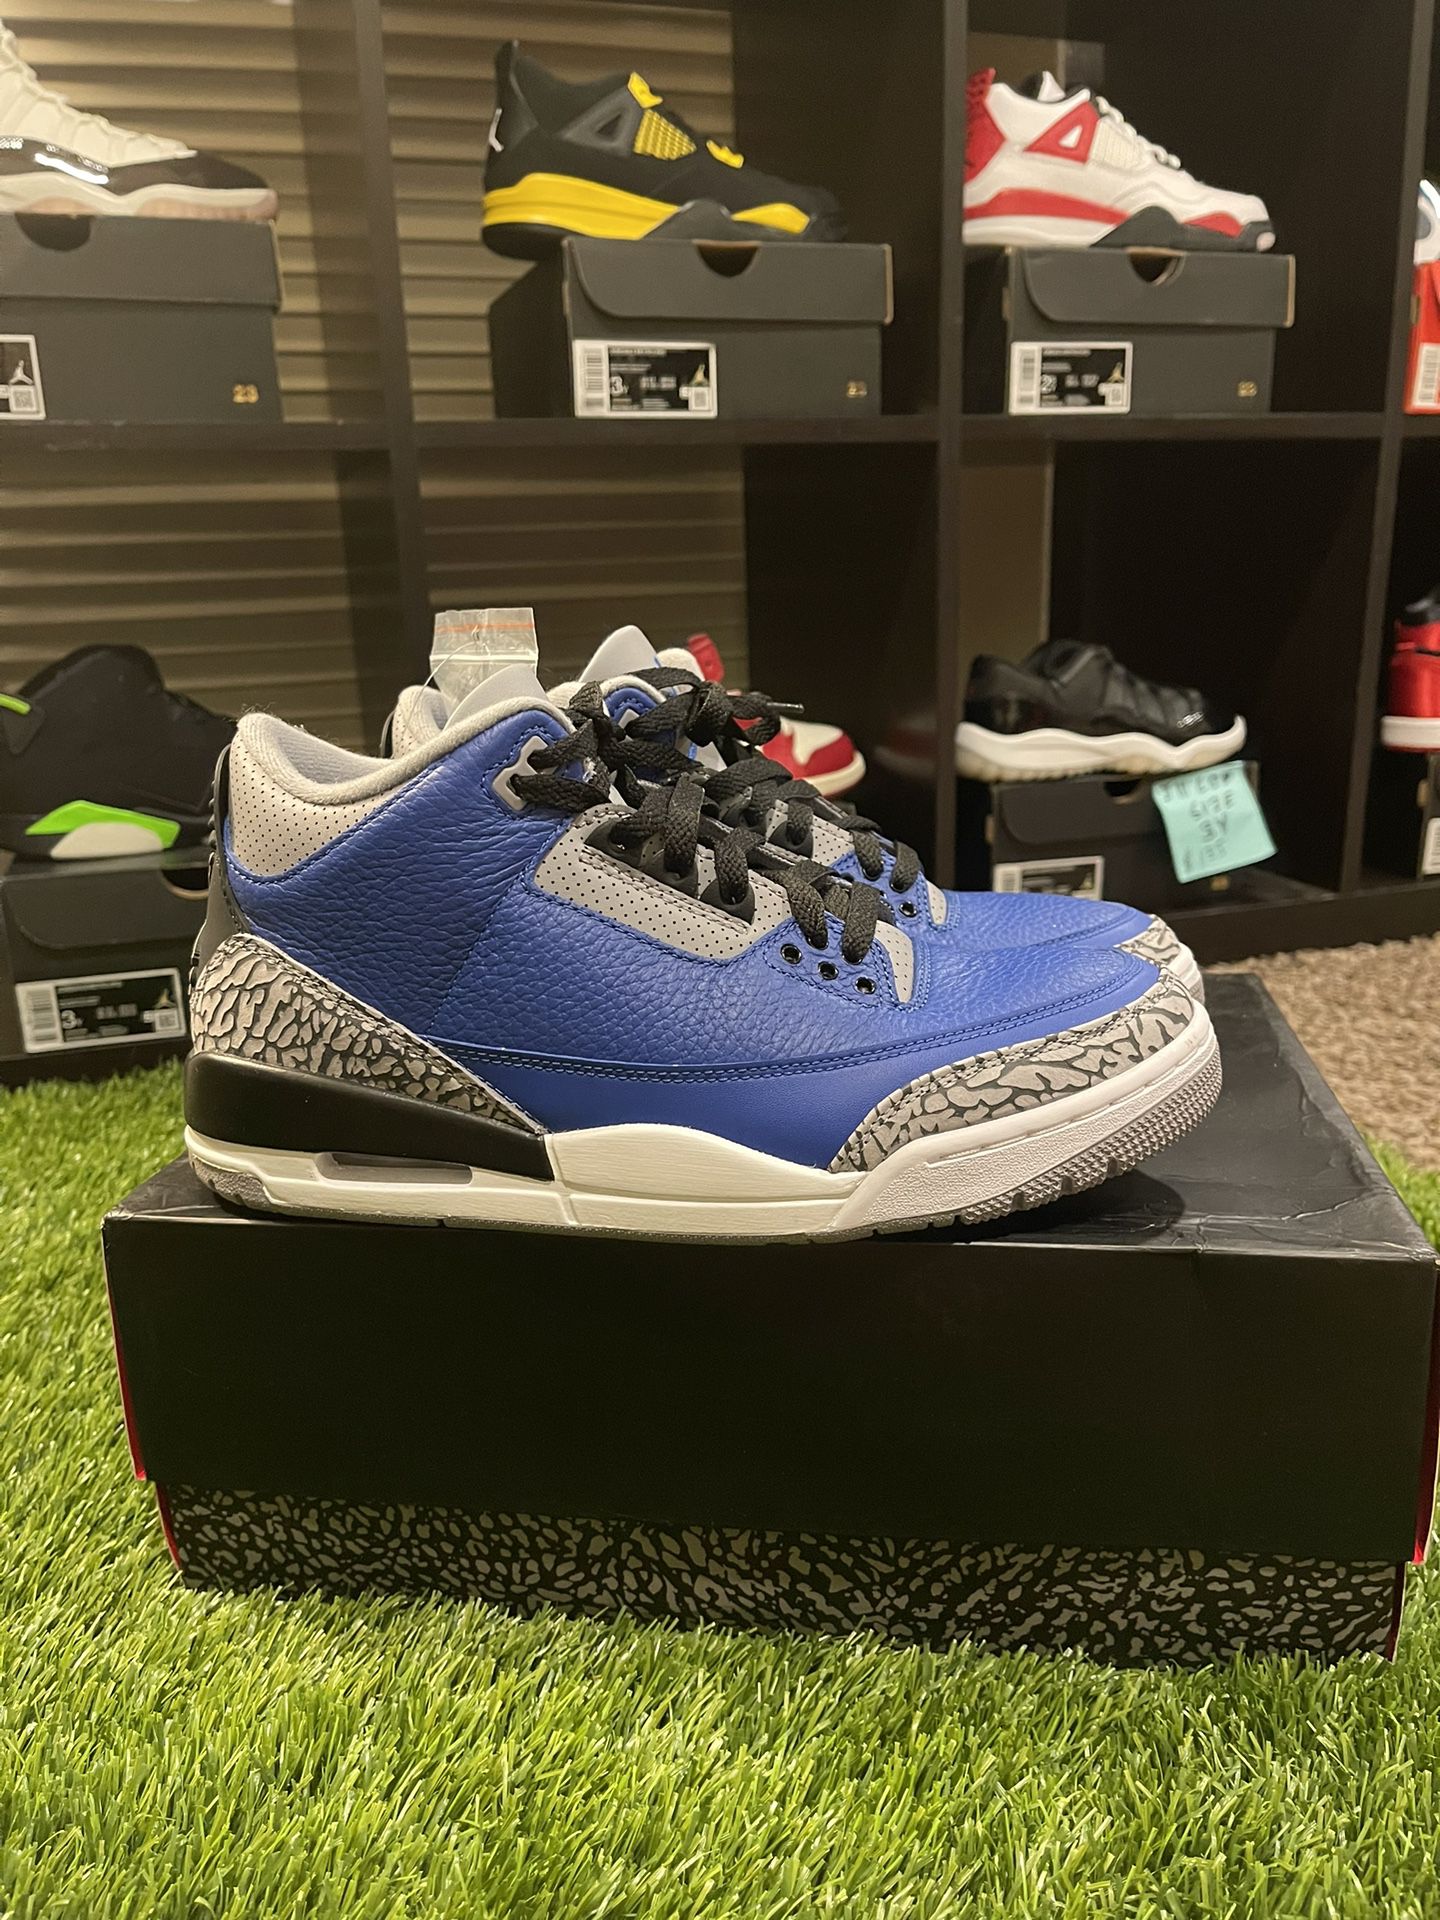 Jordan 3 Retro Size 8.5